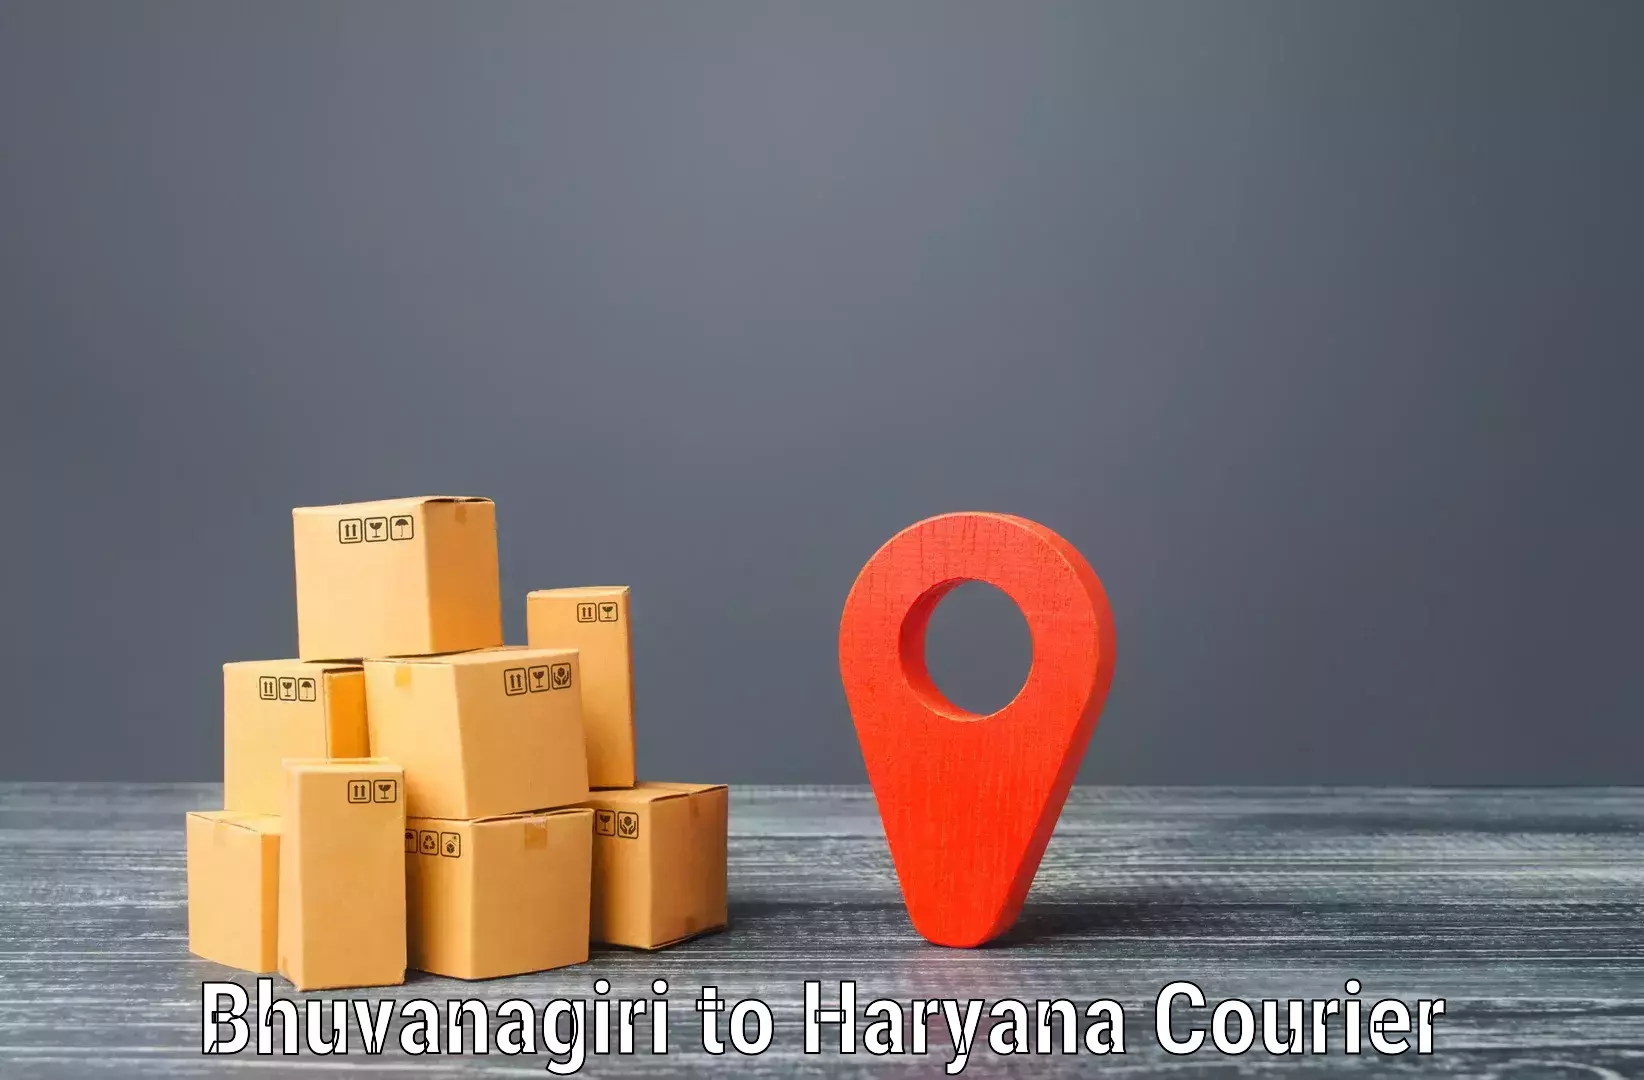 Cargo delivery service Bhuvanagiri to NCR Haryana